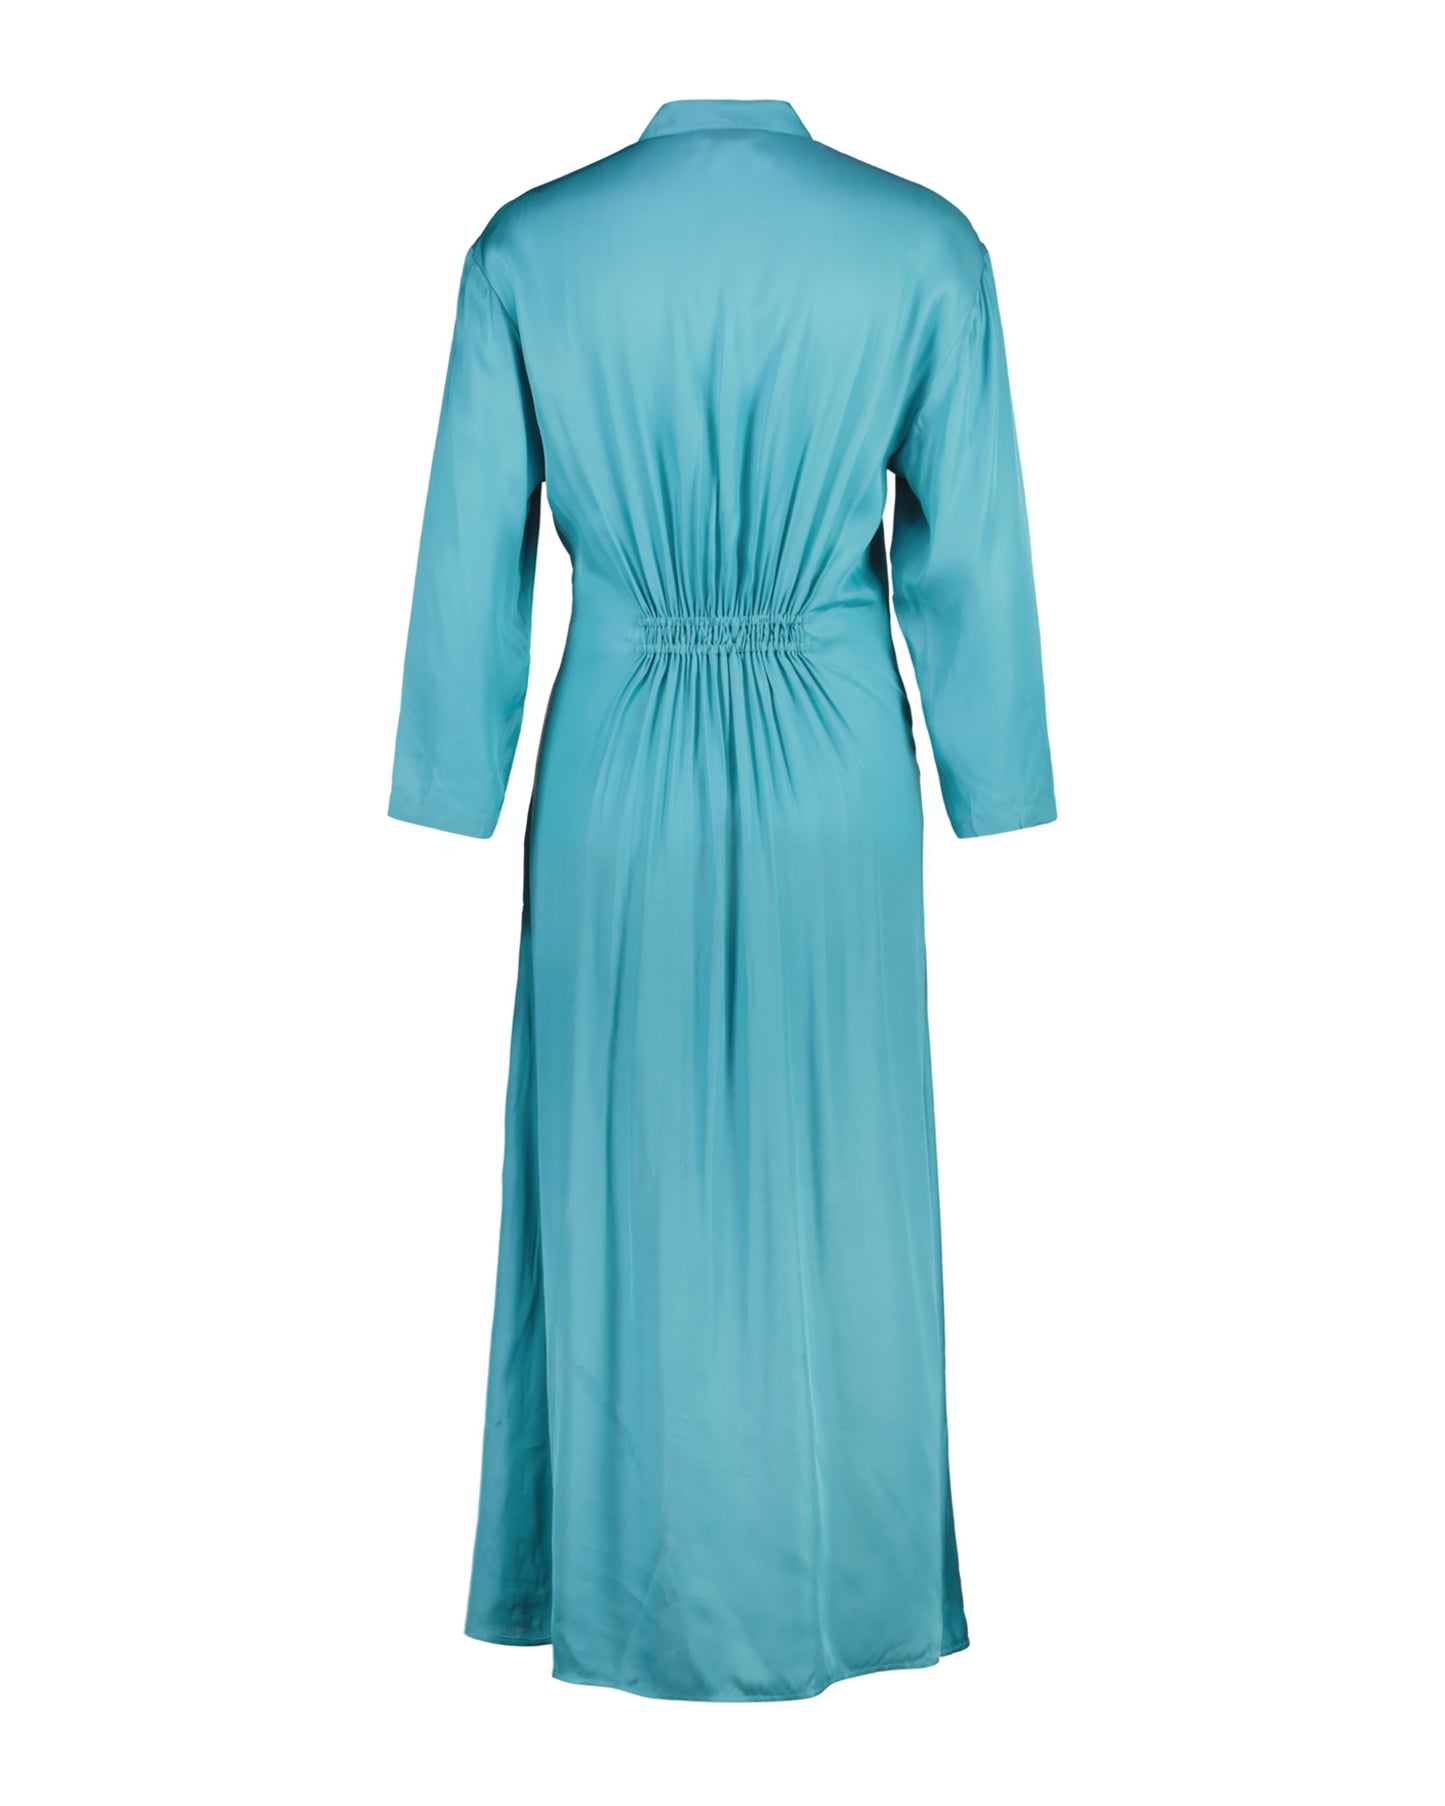 Gathered Dress - Tropic Blue